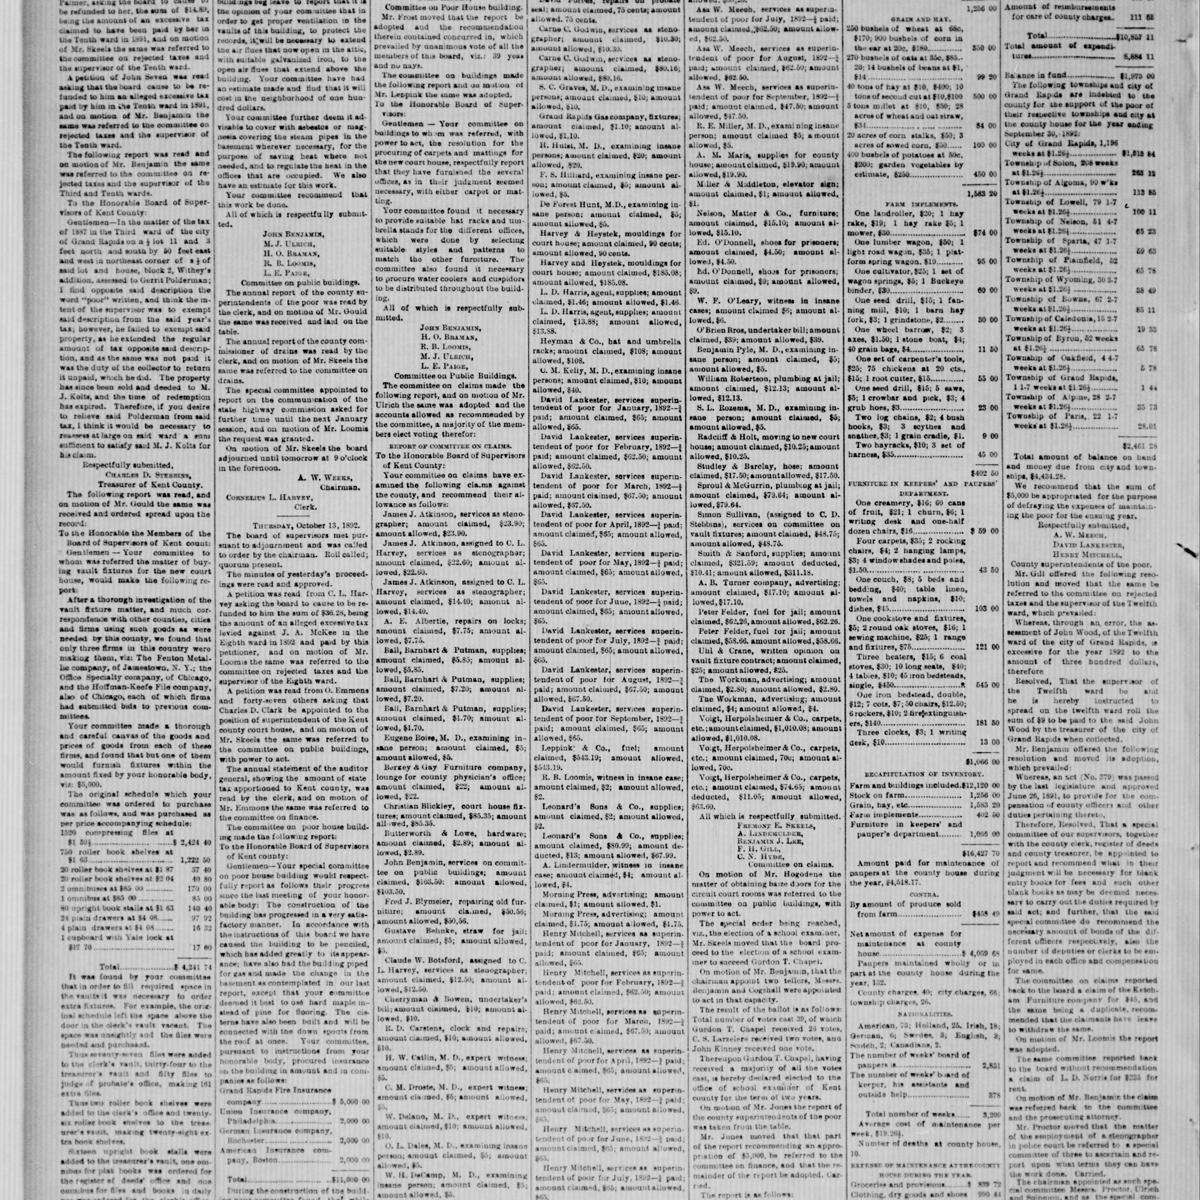 Grand Rapids Herald, 1892-10-17, page 2